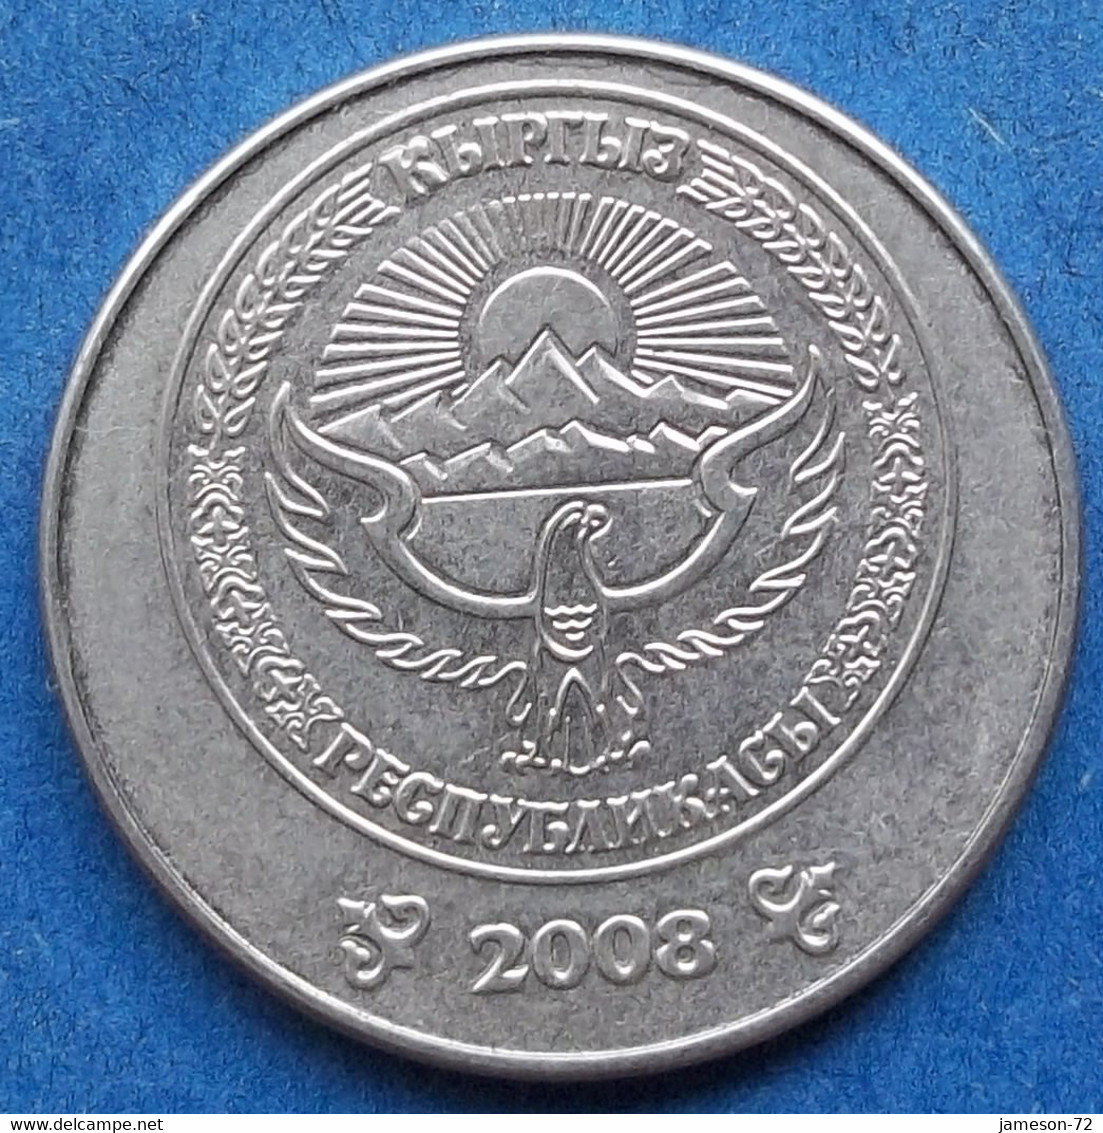 KYRGYZSTAN - 3 Som 2008 KM# 15 Independent Republic (1991) - Edelweiss Coins - Kirgisistan